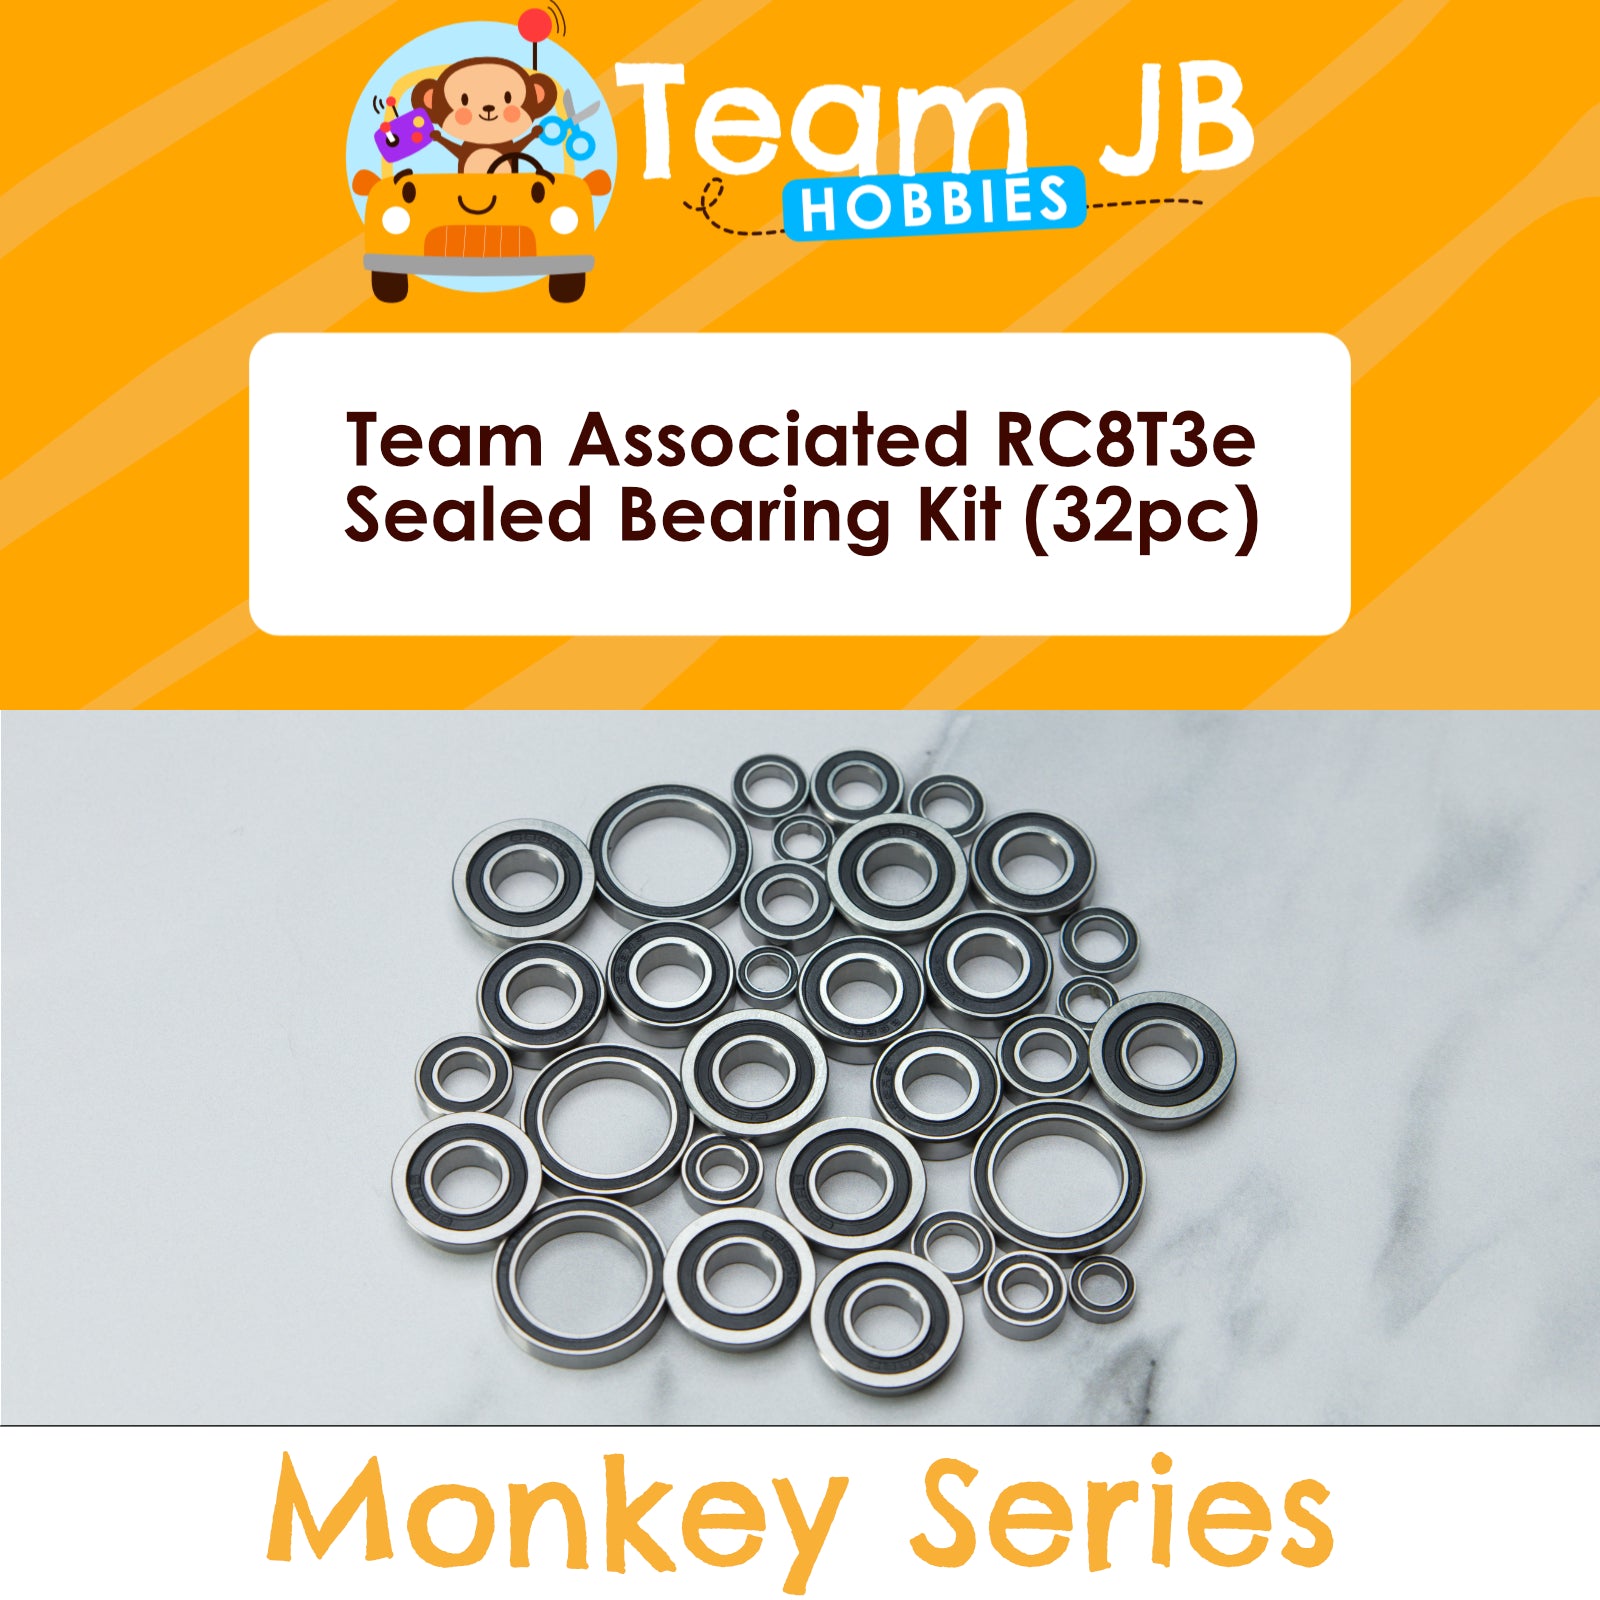 Team Associated RC8T3e - Sealed Bearing Kit